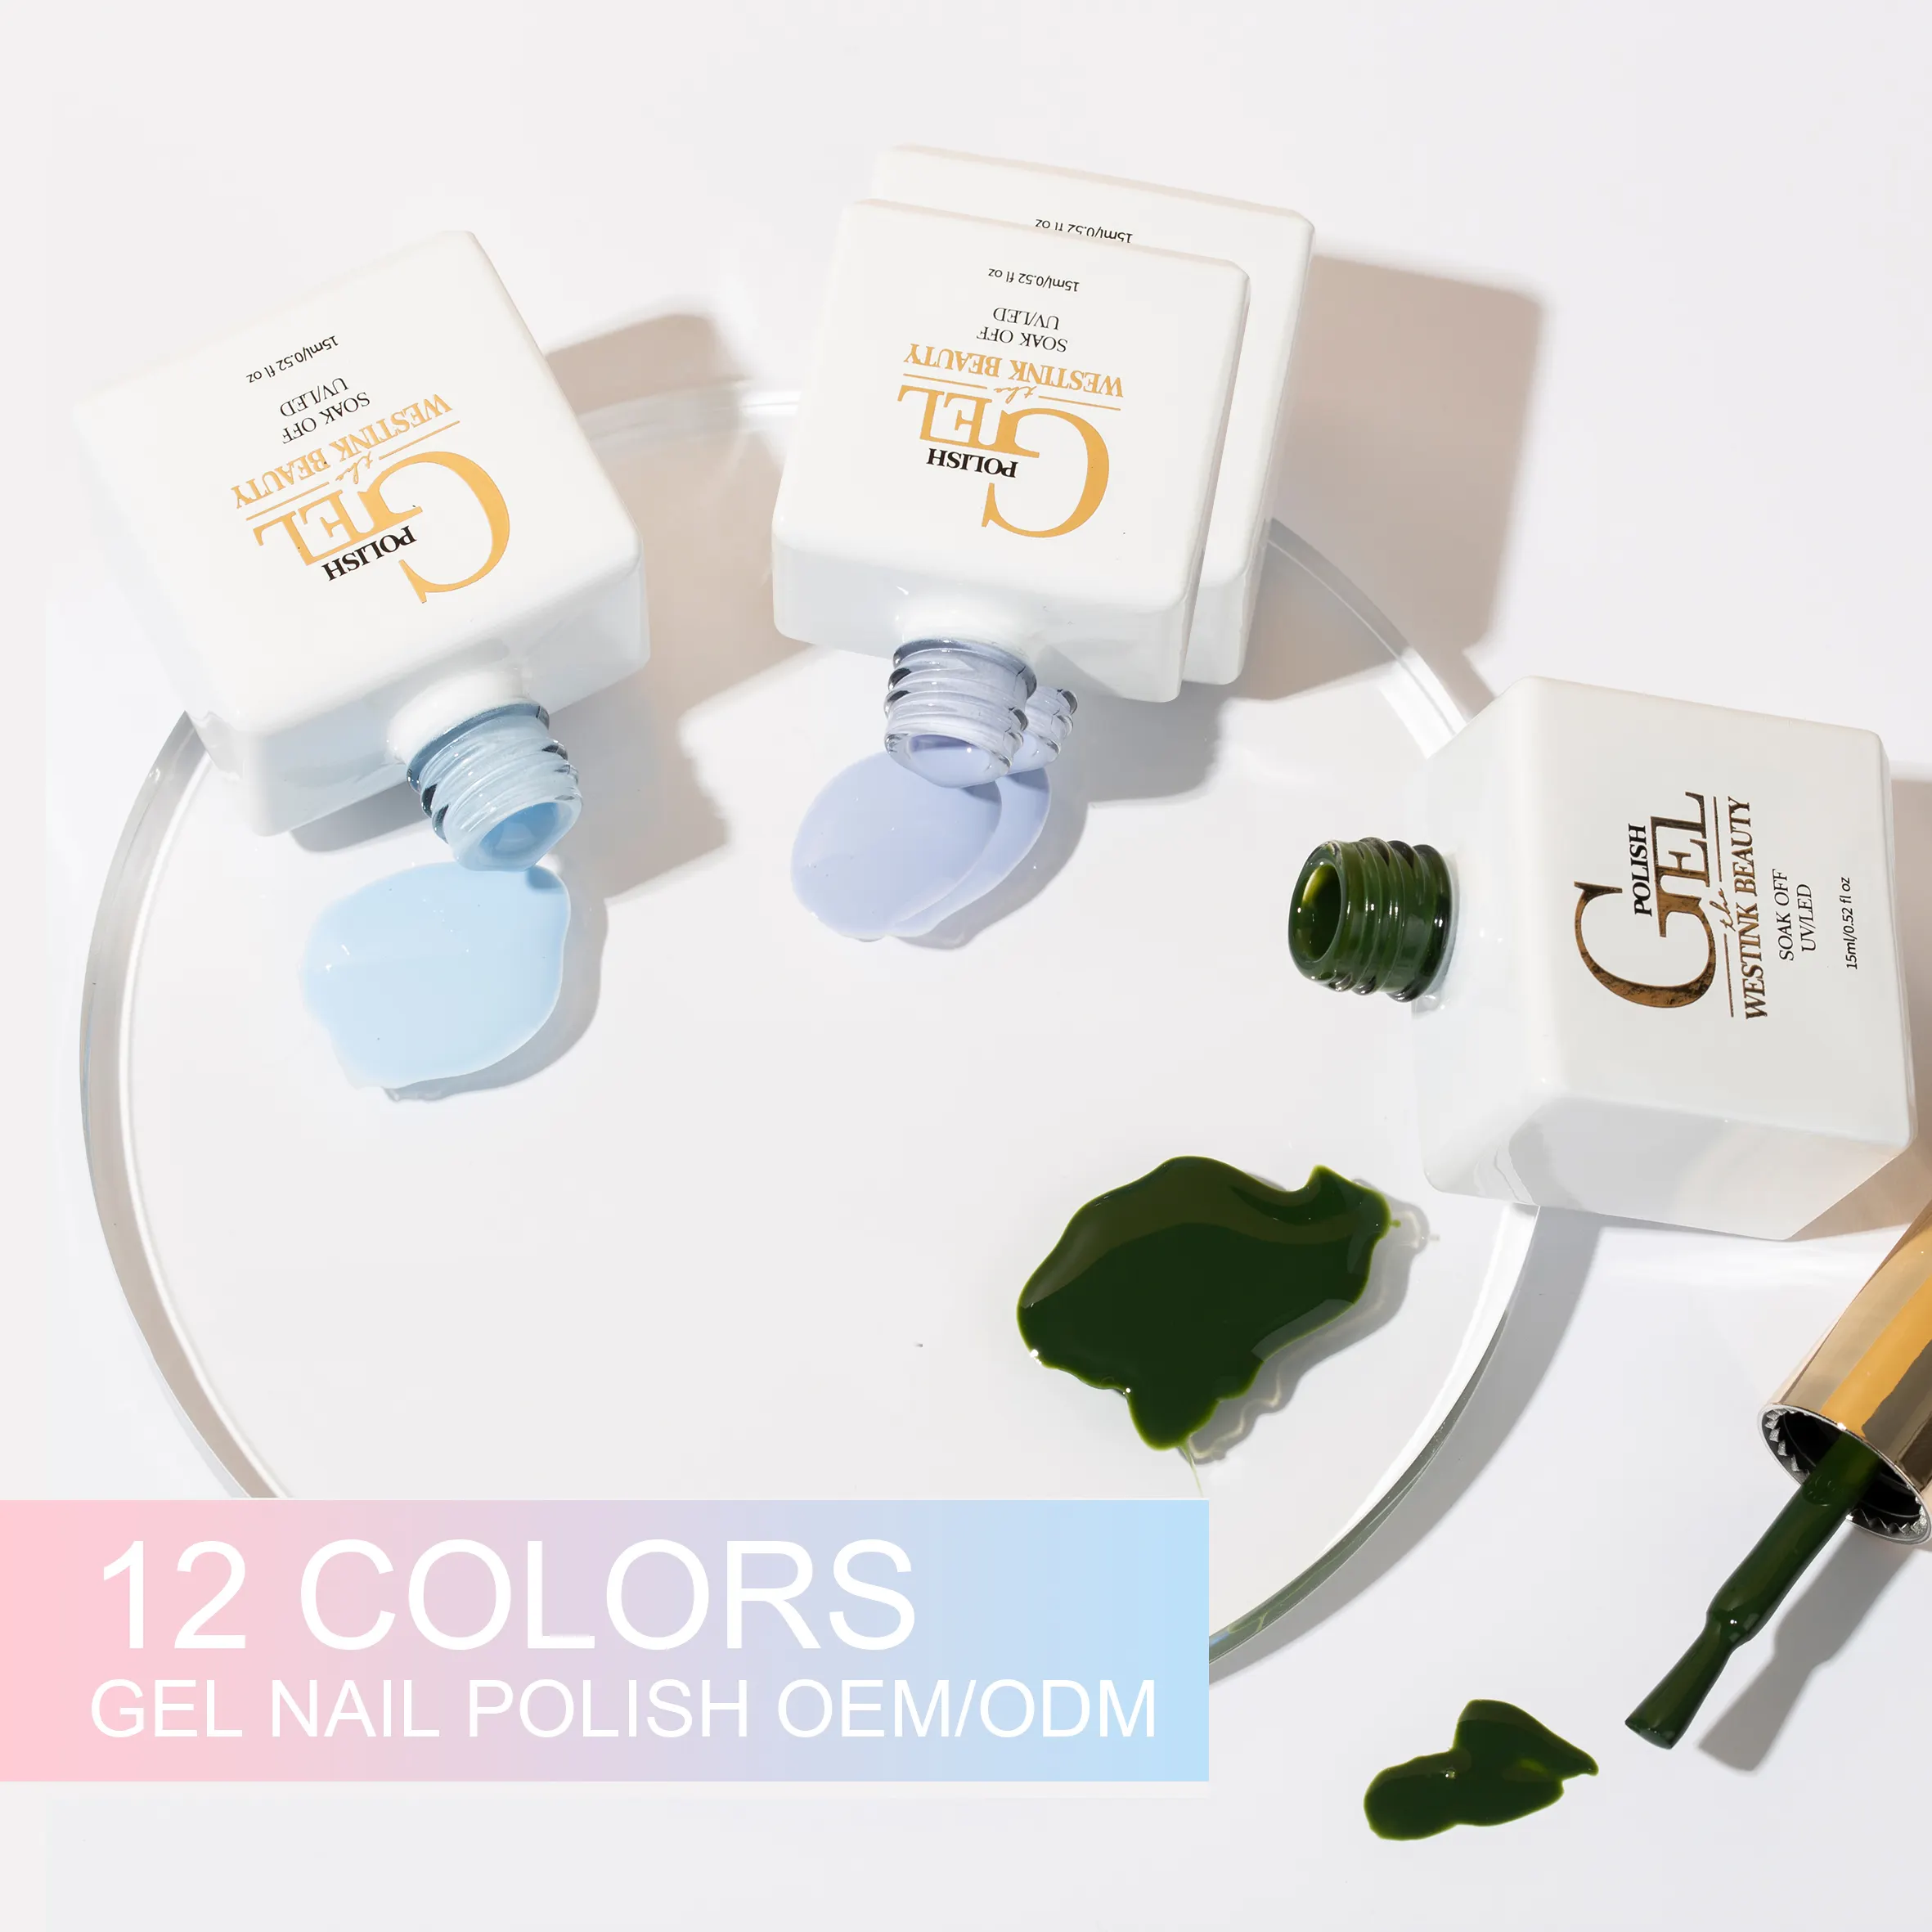 Westink Beauty 12 Colors Set Gel Nail Polish UV Led Kit Professional Design For Nail Art